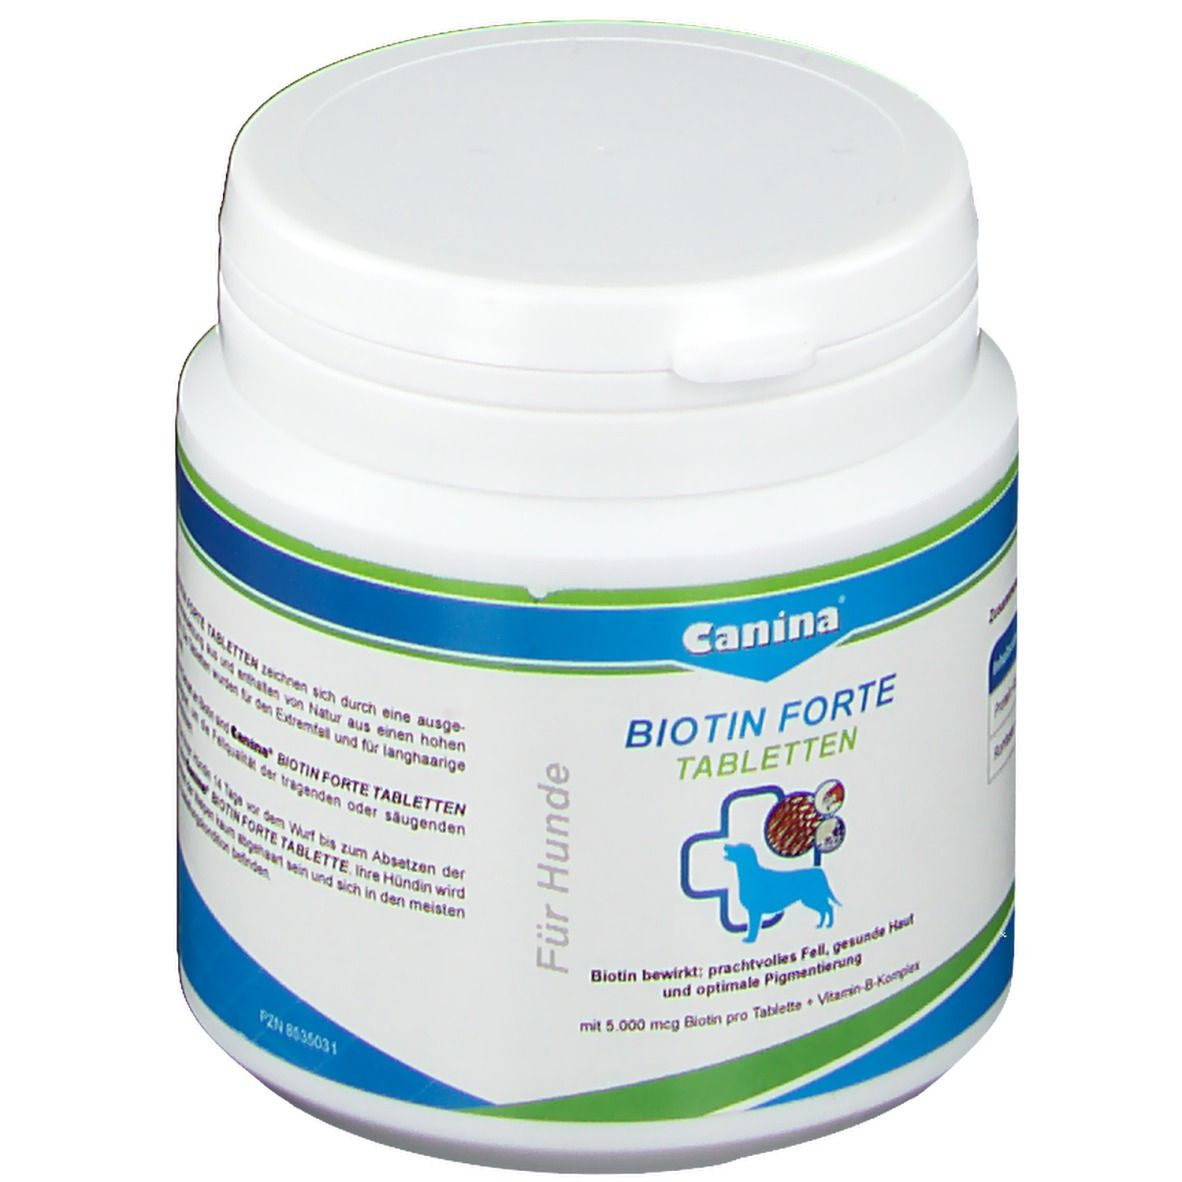 Canina® Biotin forte